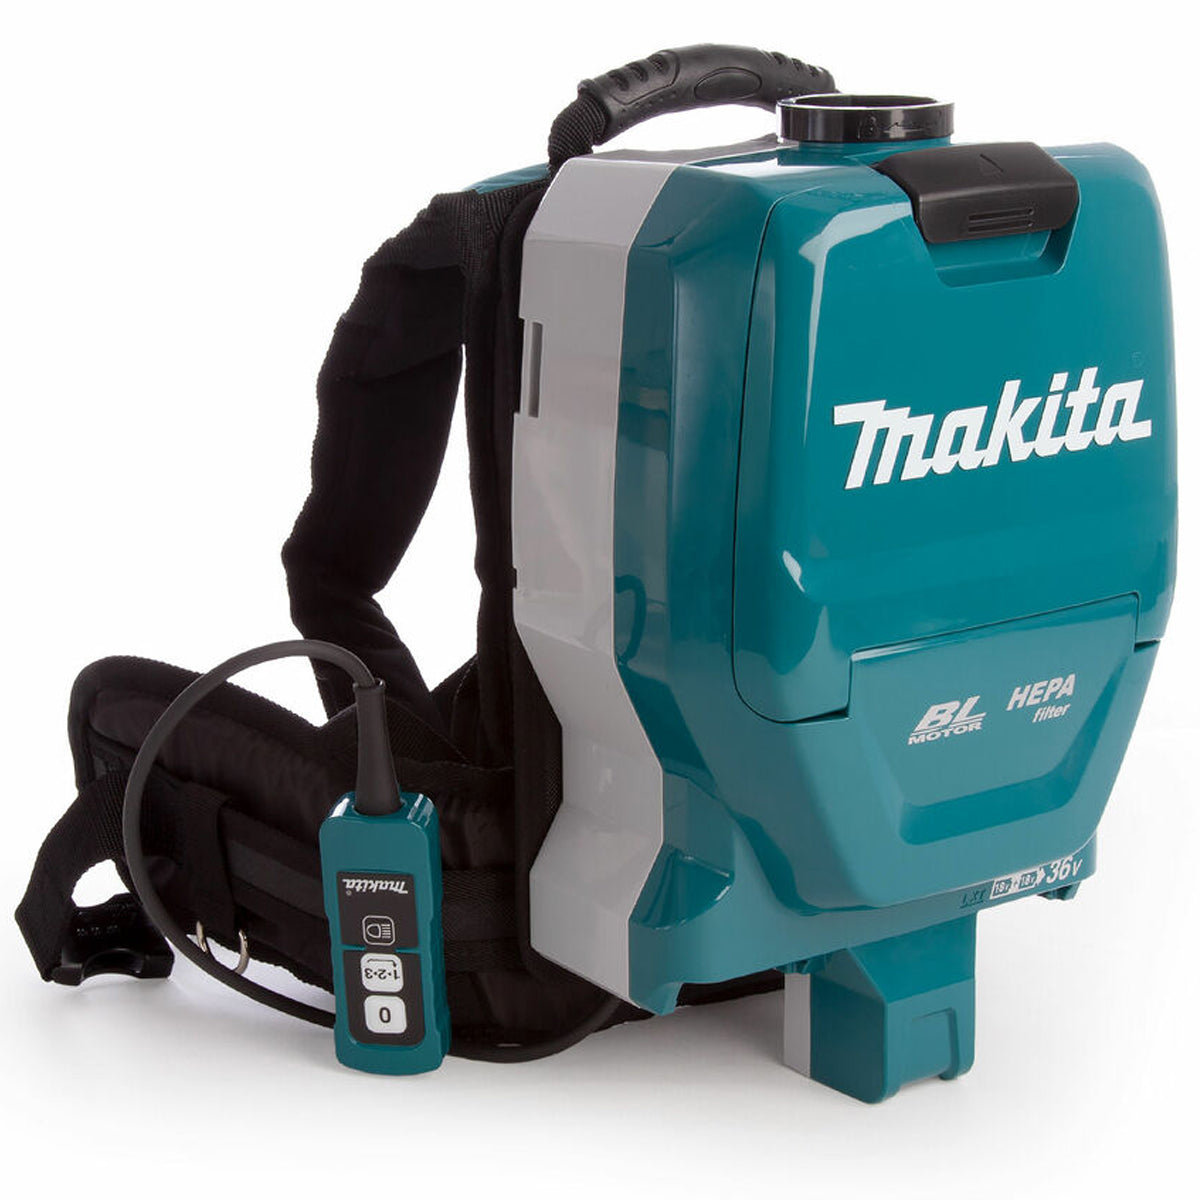 Makita DVC261ZX11 Twin 18V/36V Brushless Backpack Vacuum Cleaner Body Only